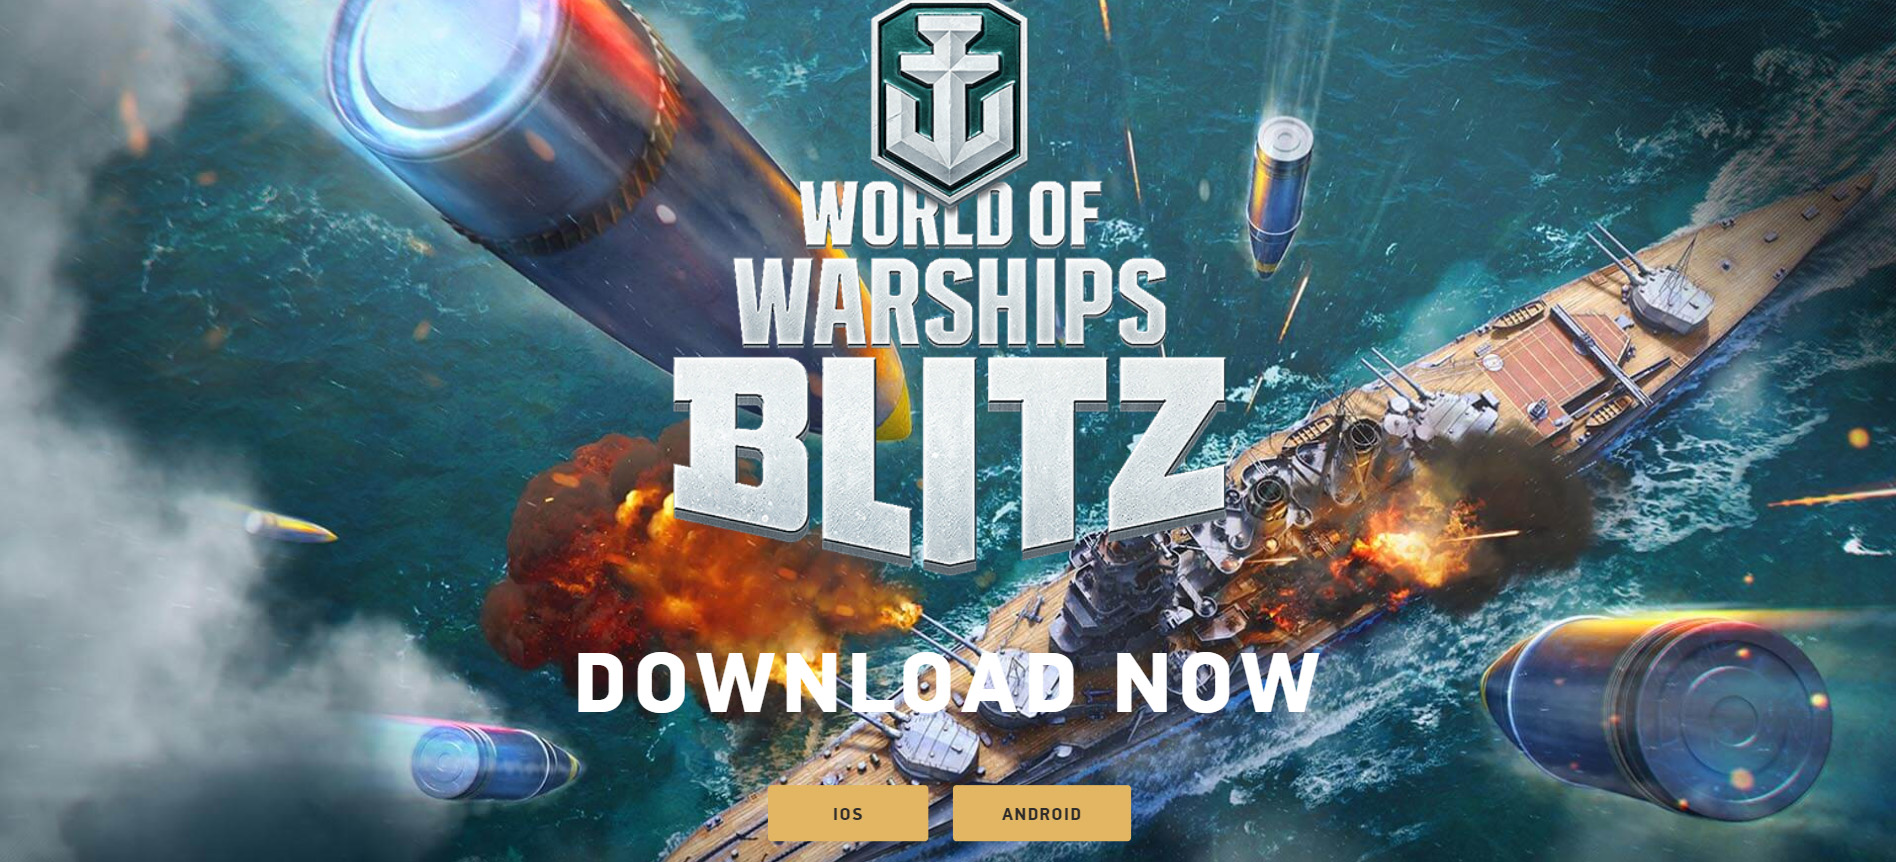 world of warships blitz enter coses